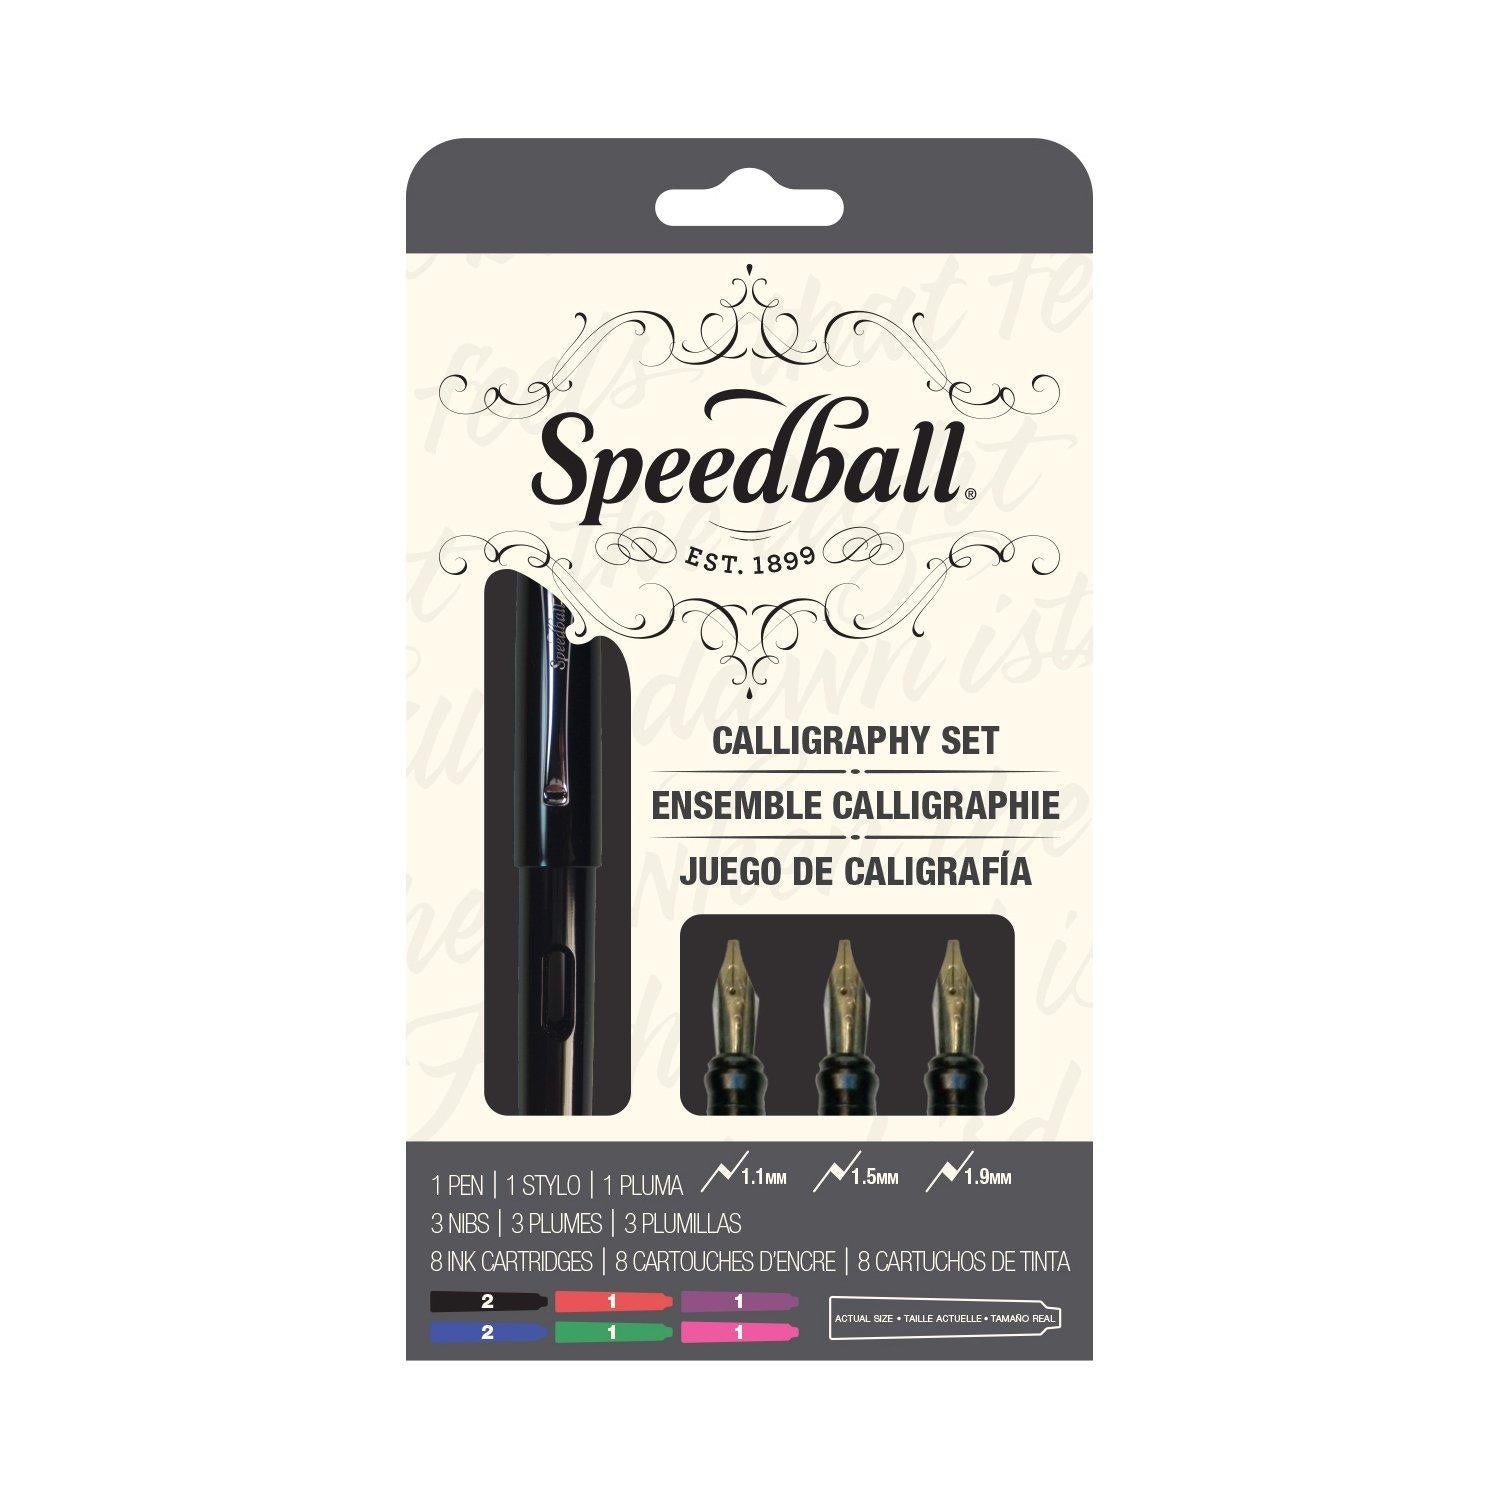 Speedball Calligraphy 1.1mm Fountain Pen